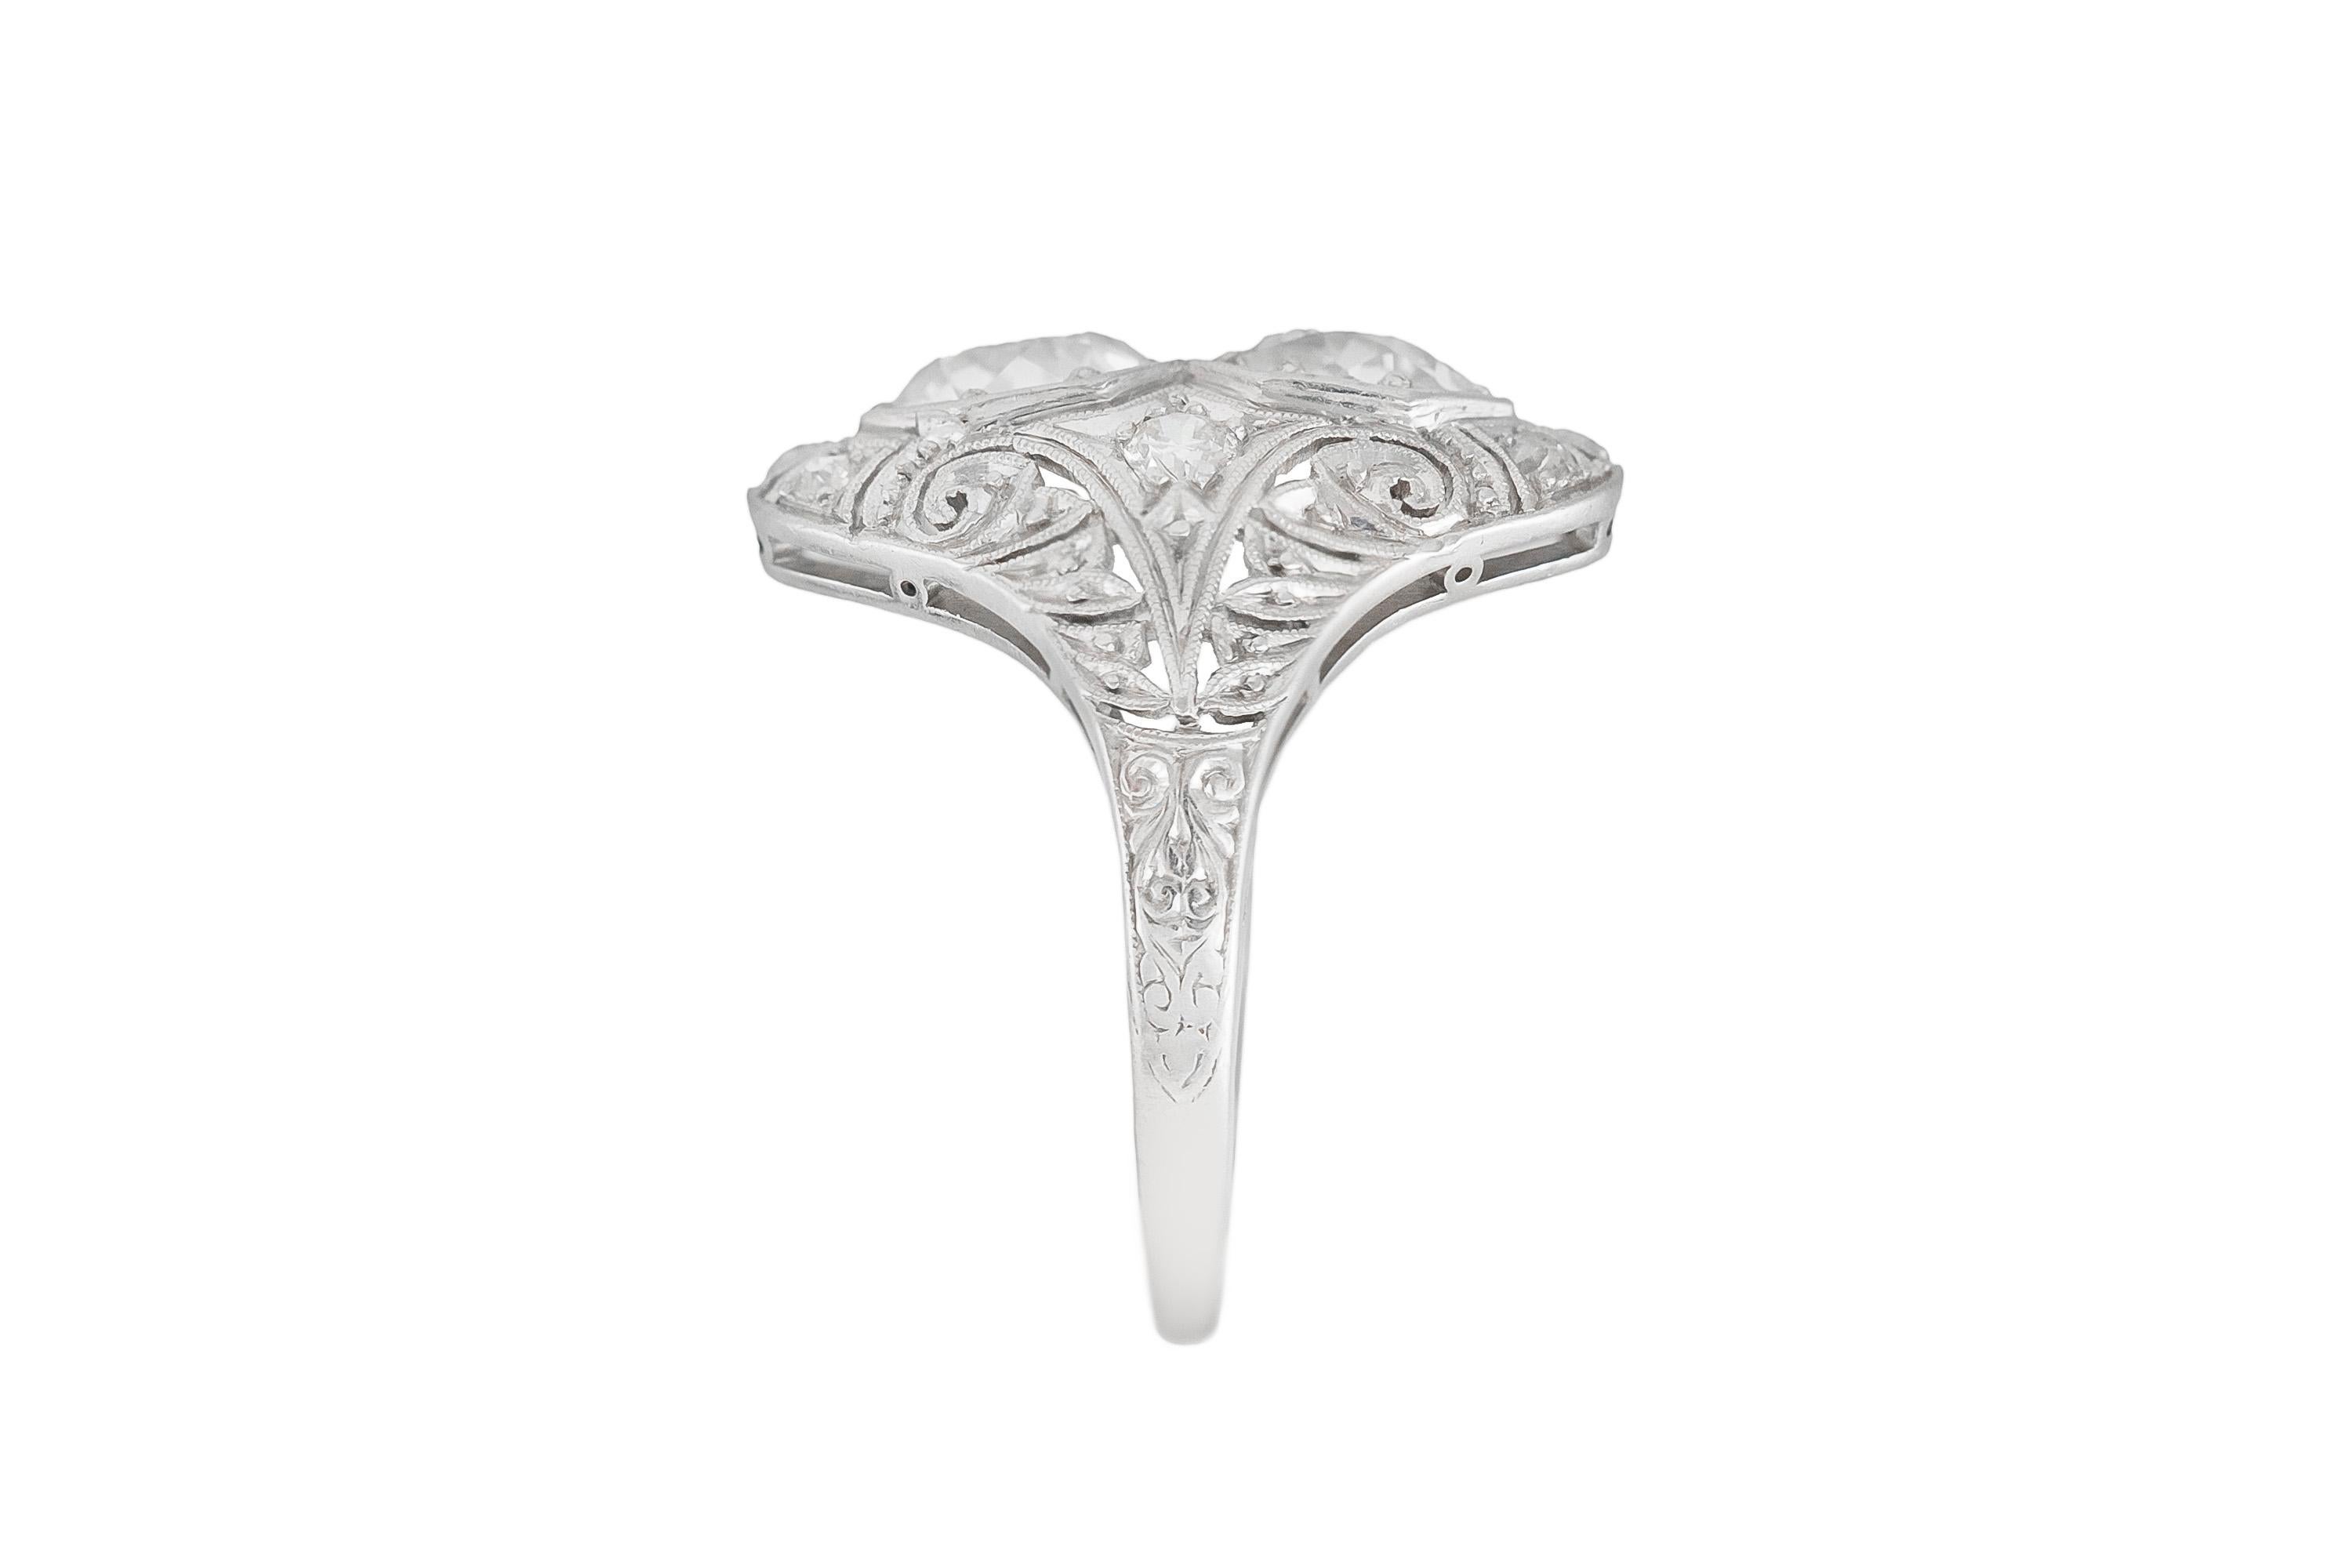 Art Deco 1930s Filigree with Diamonds Ring